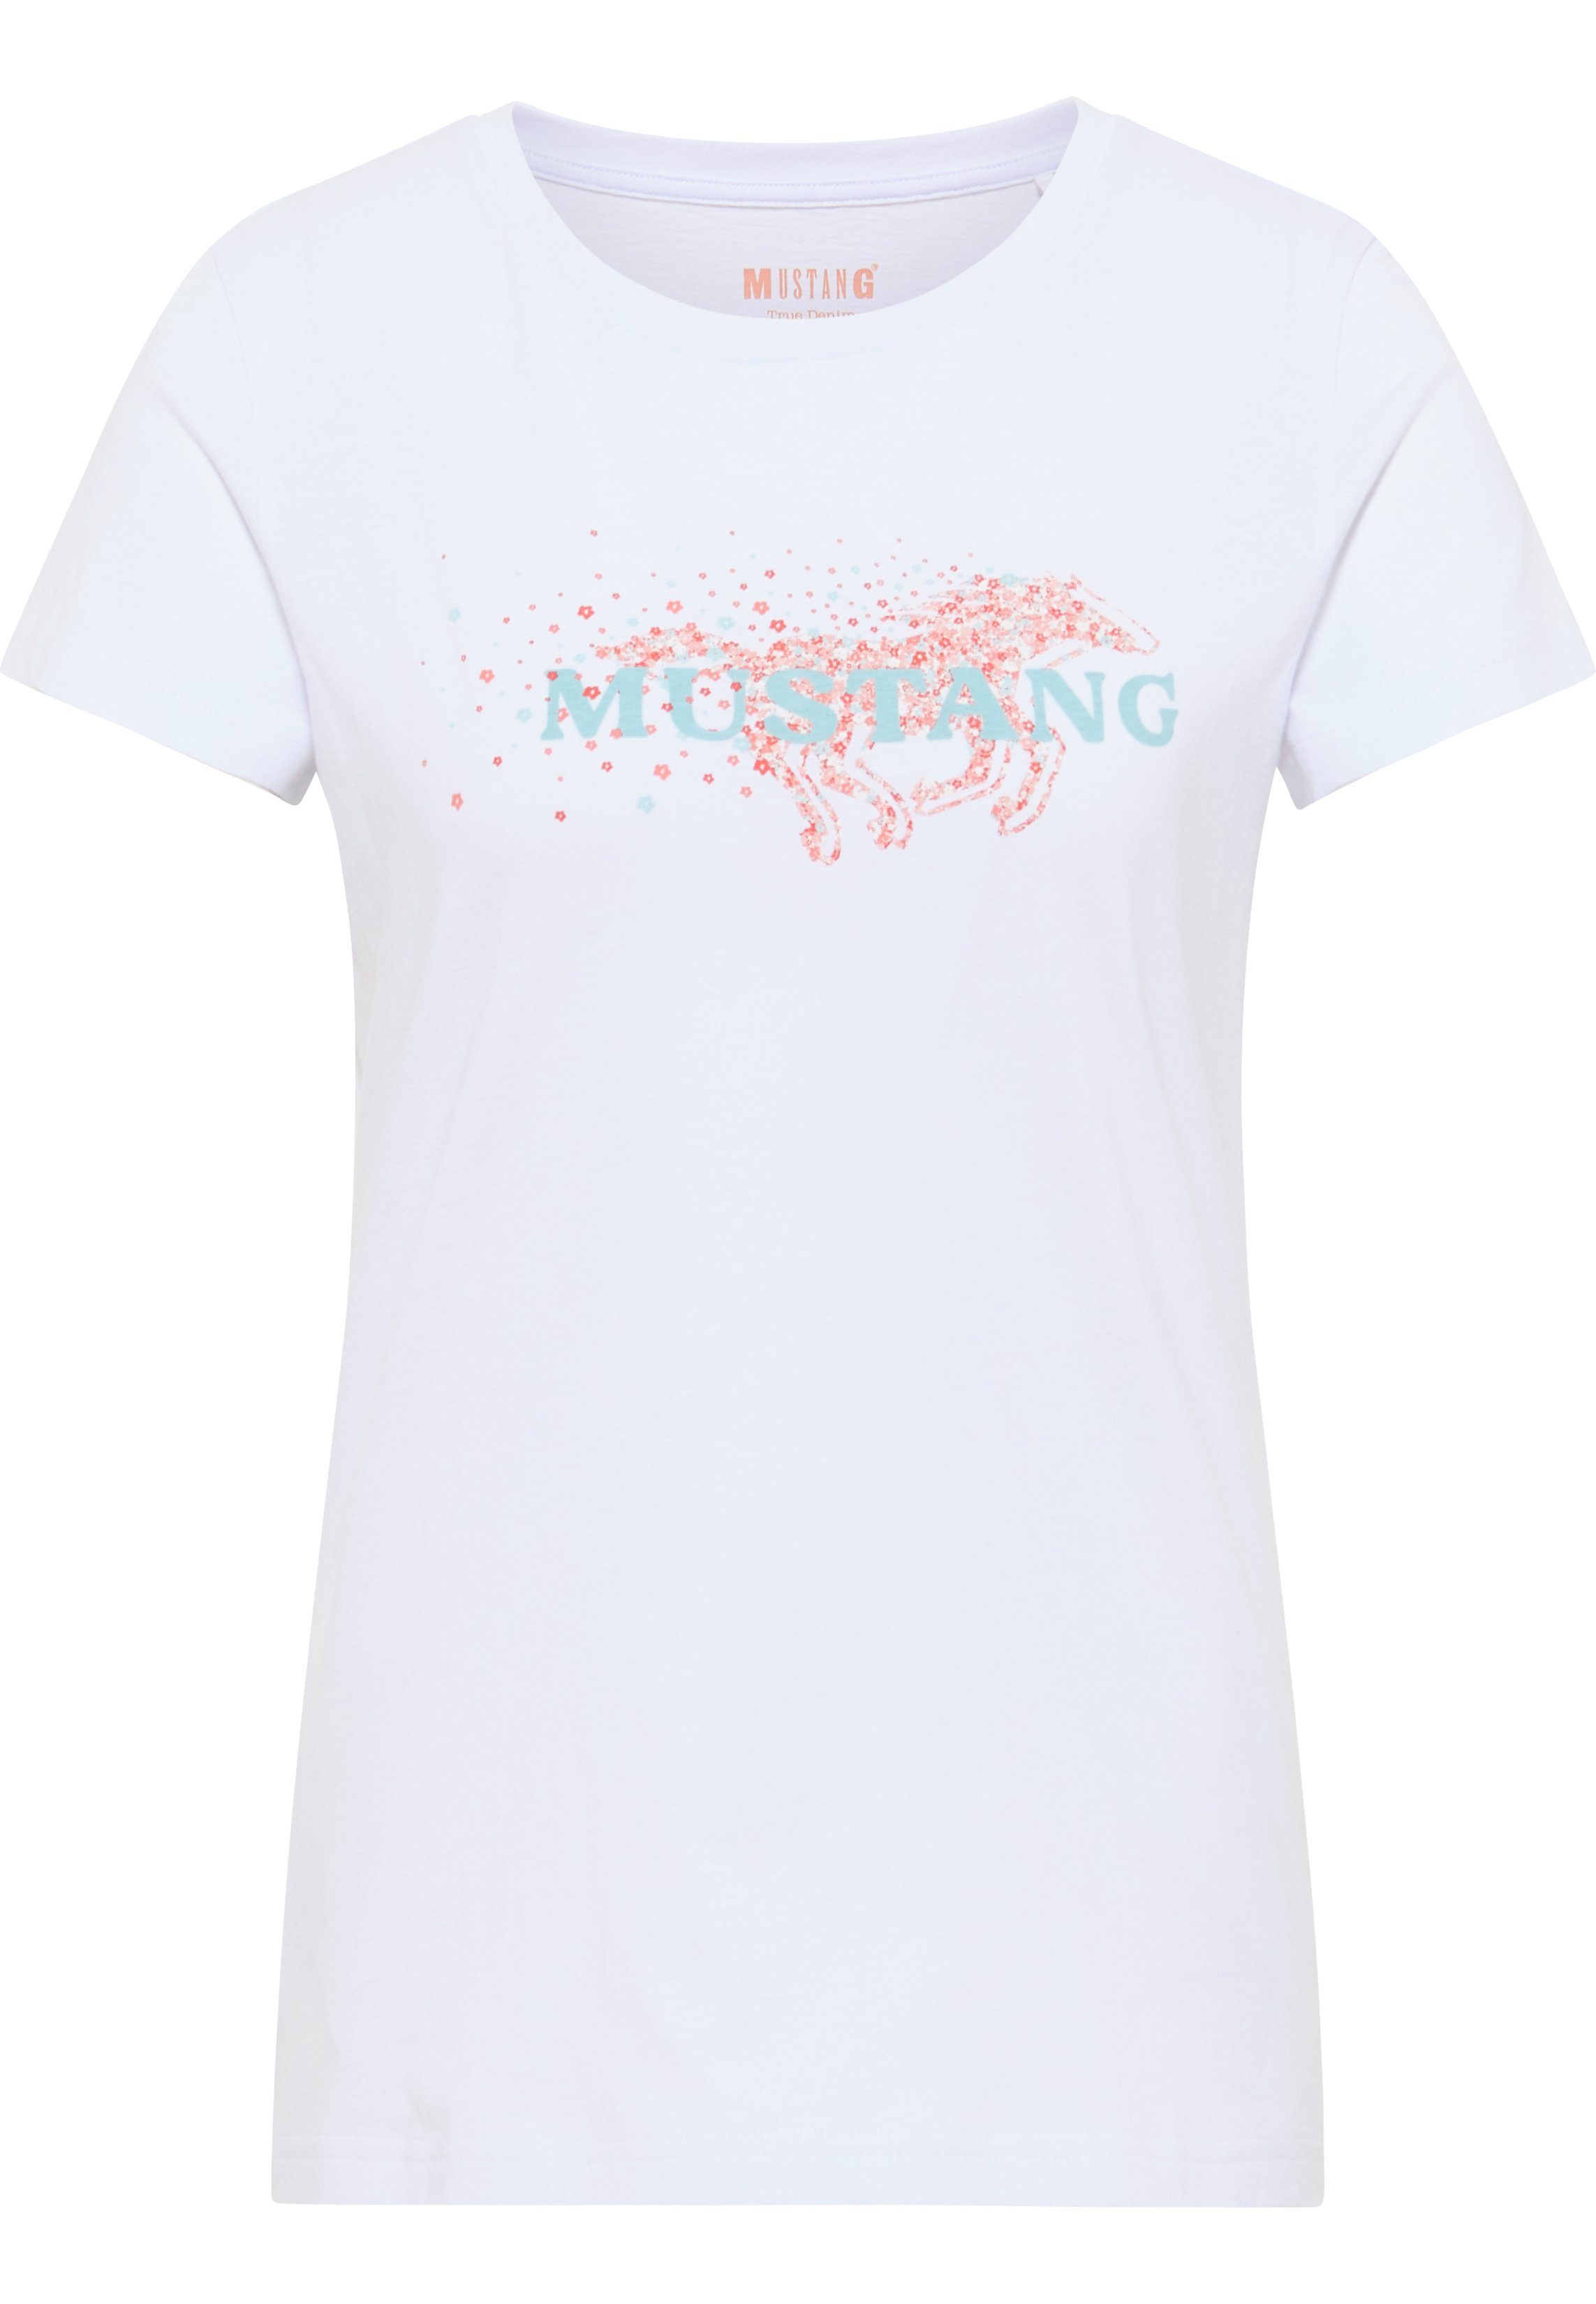 C Alexia MUSTANG T-Shirt Print weiß